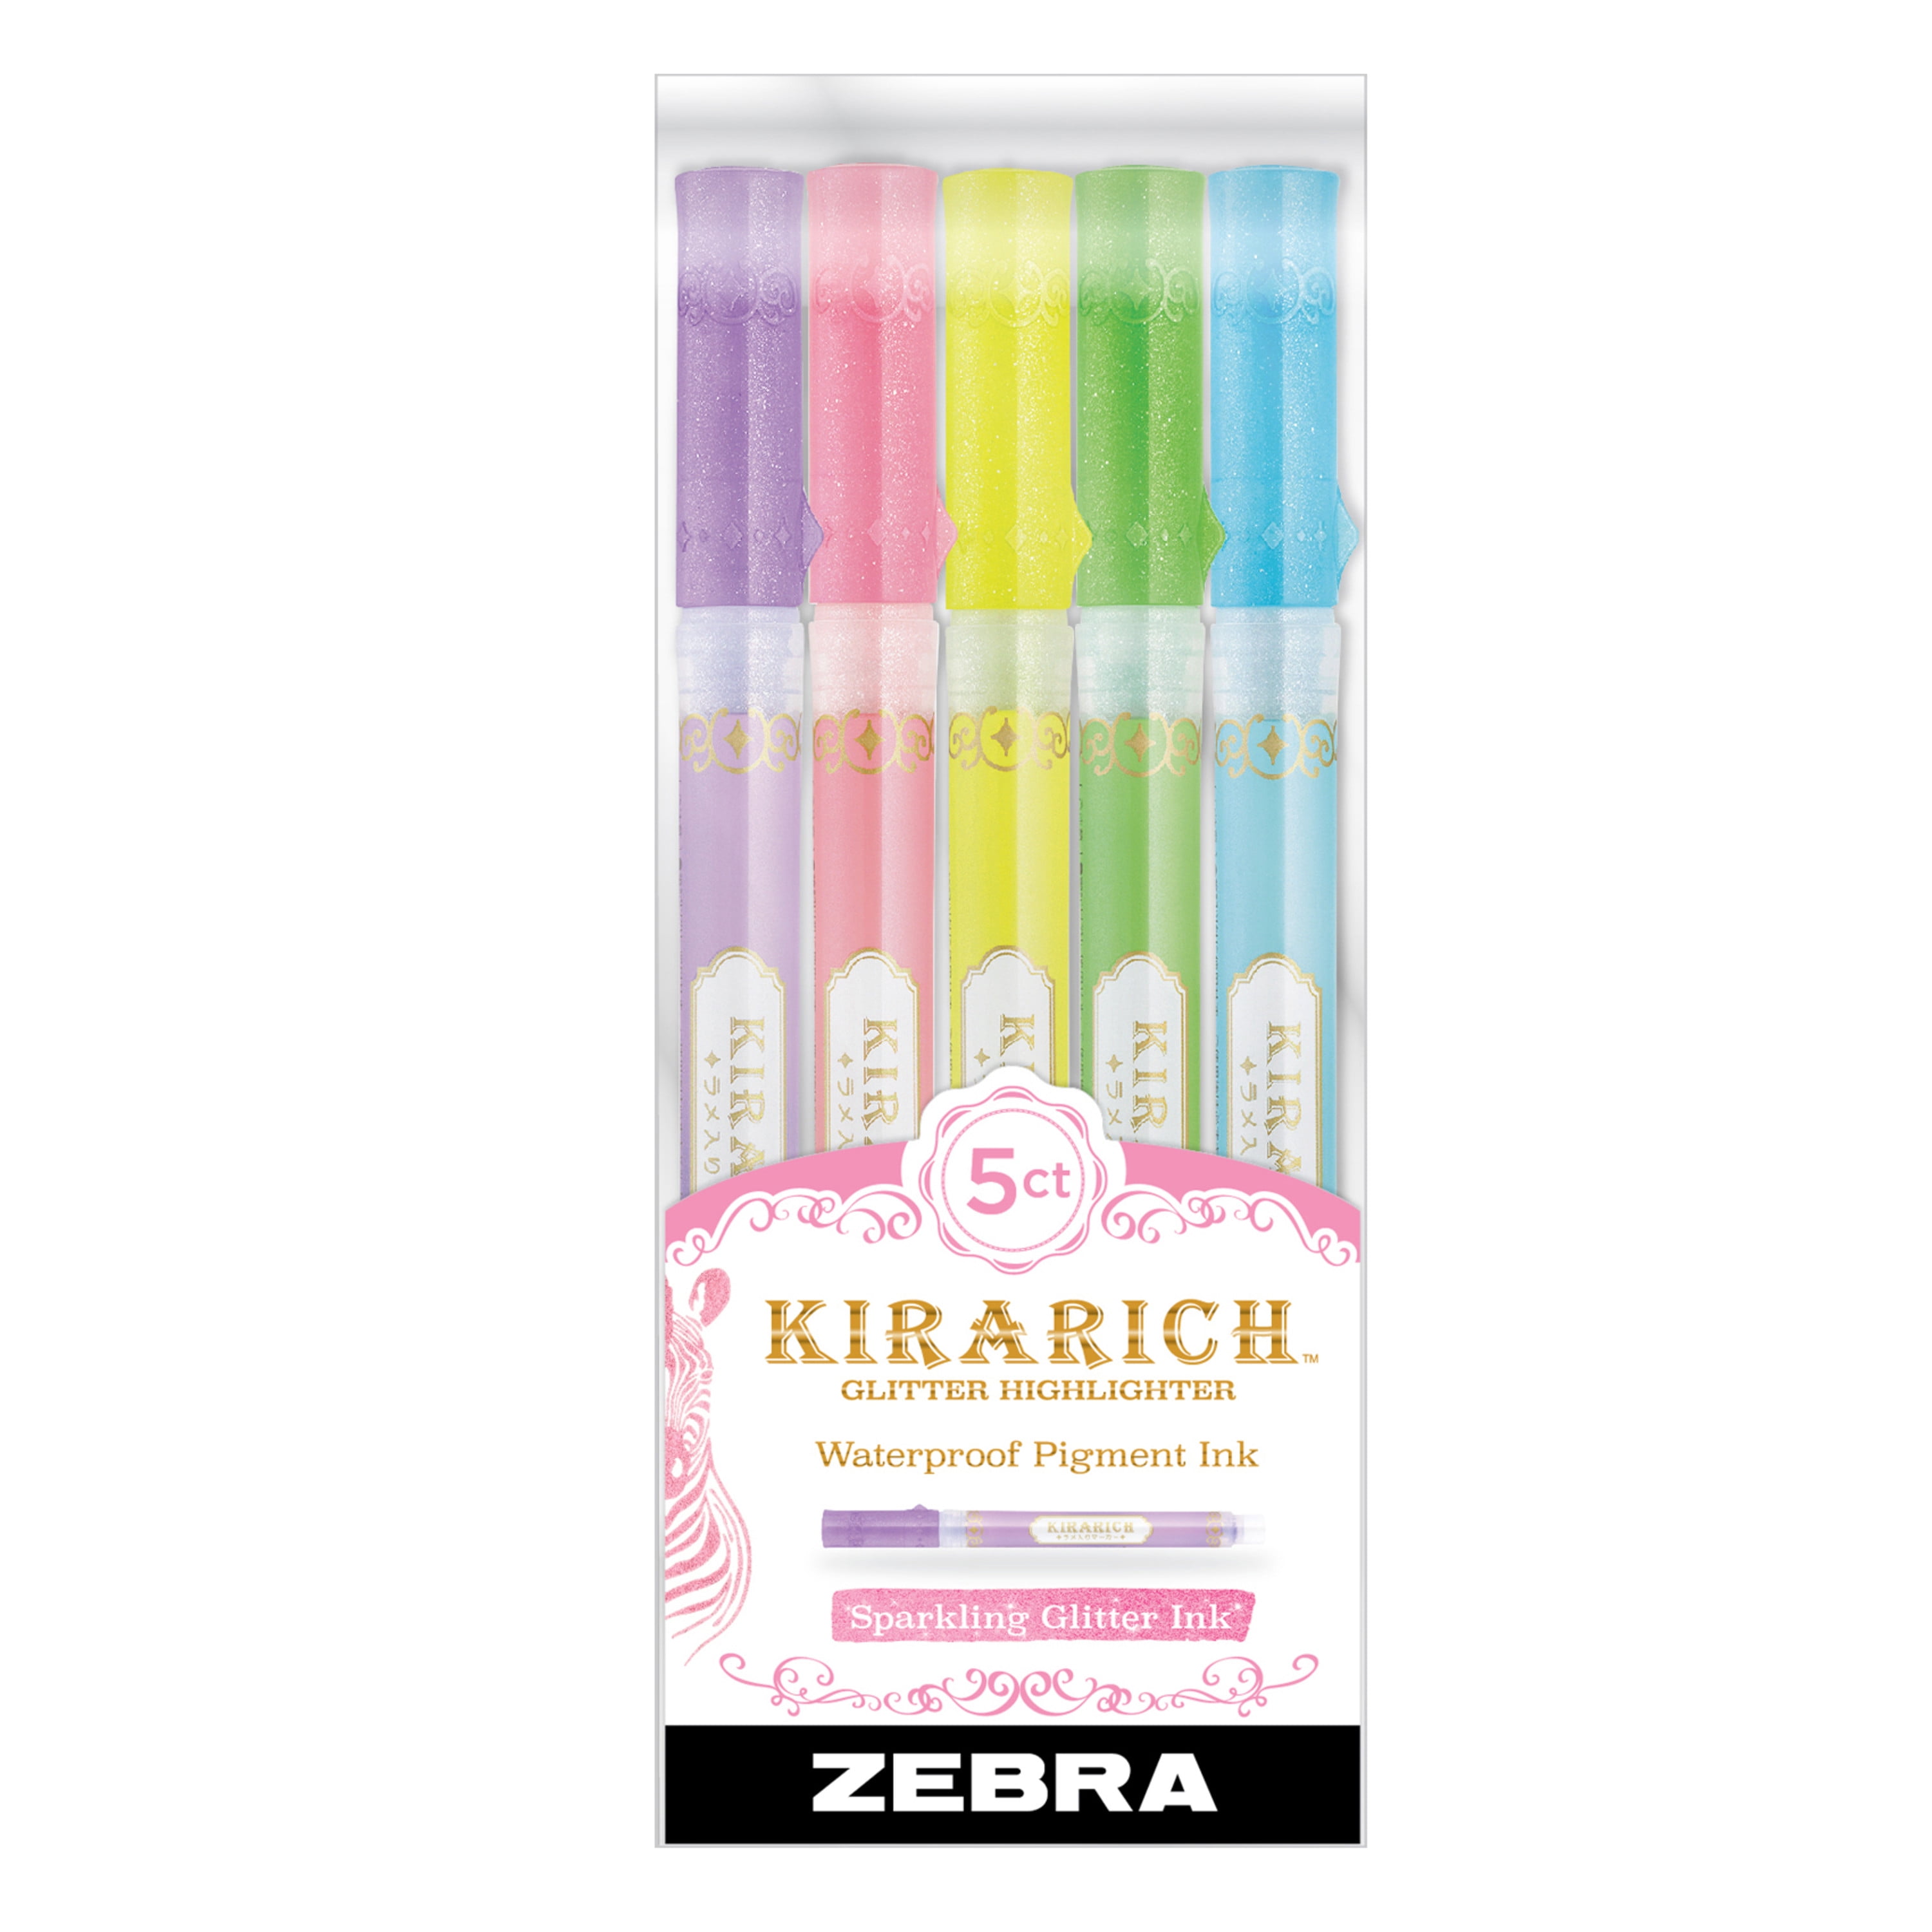 Zebra Glitter Highlighter, Kirarich, Pack of 5 – Yoseka Stationery